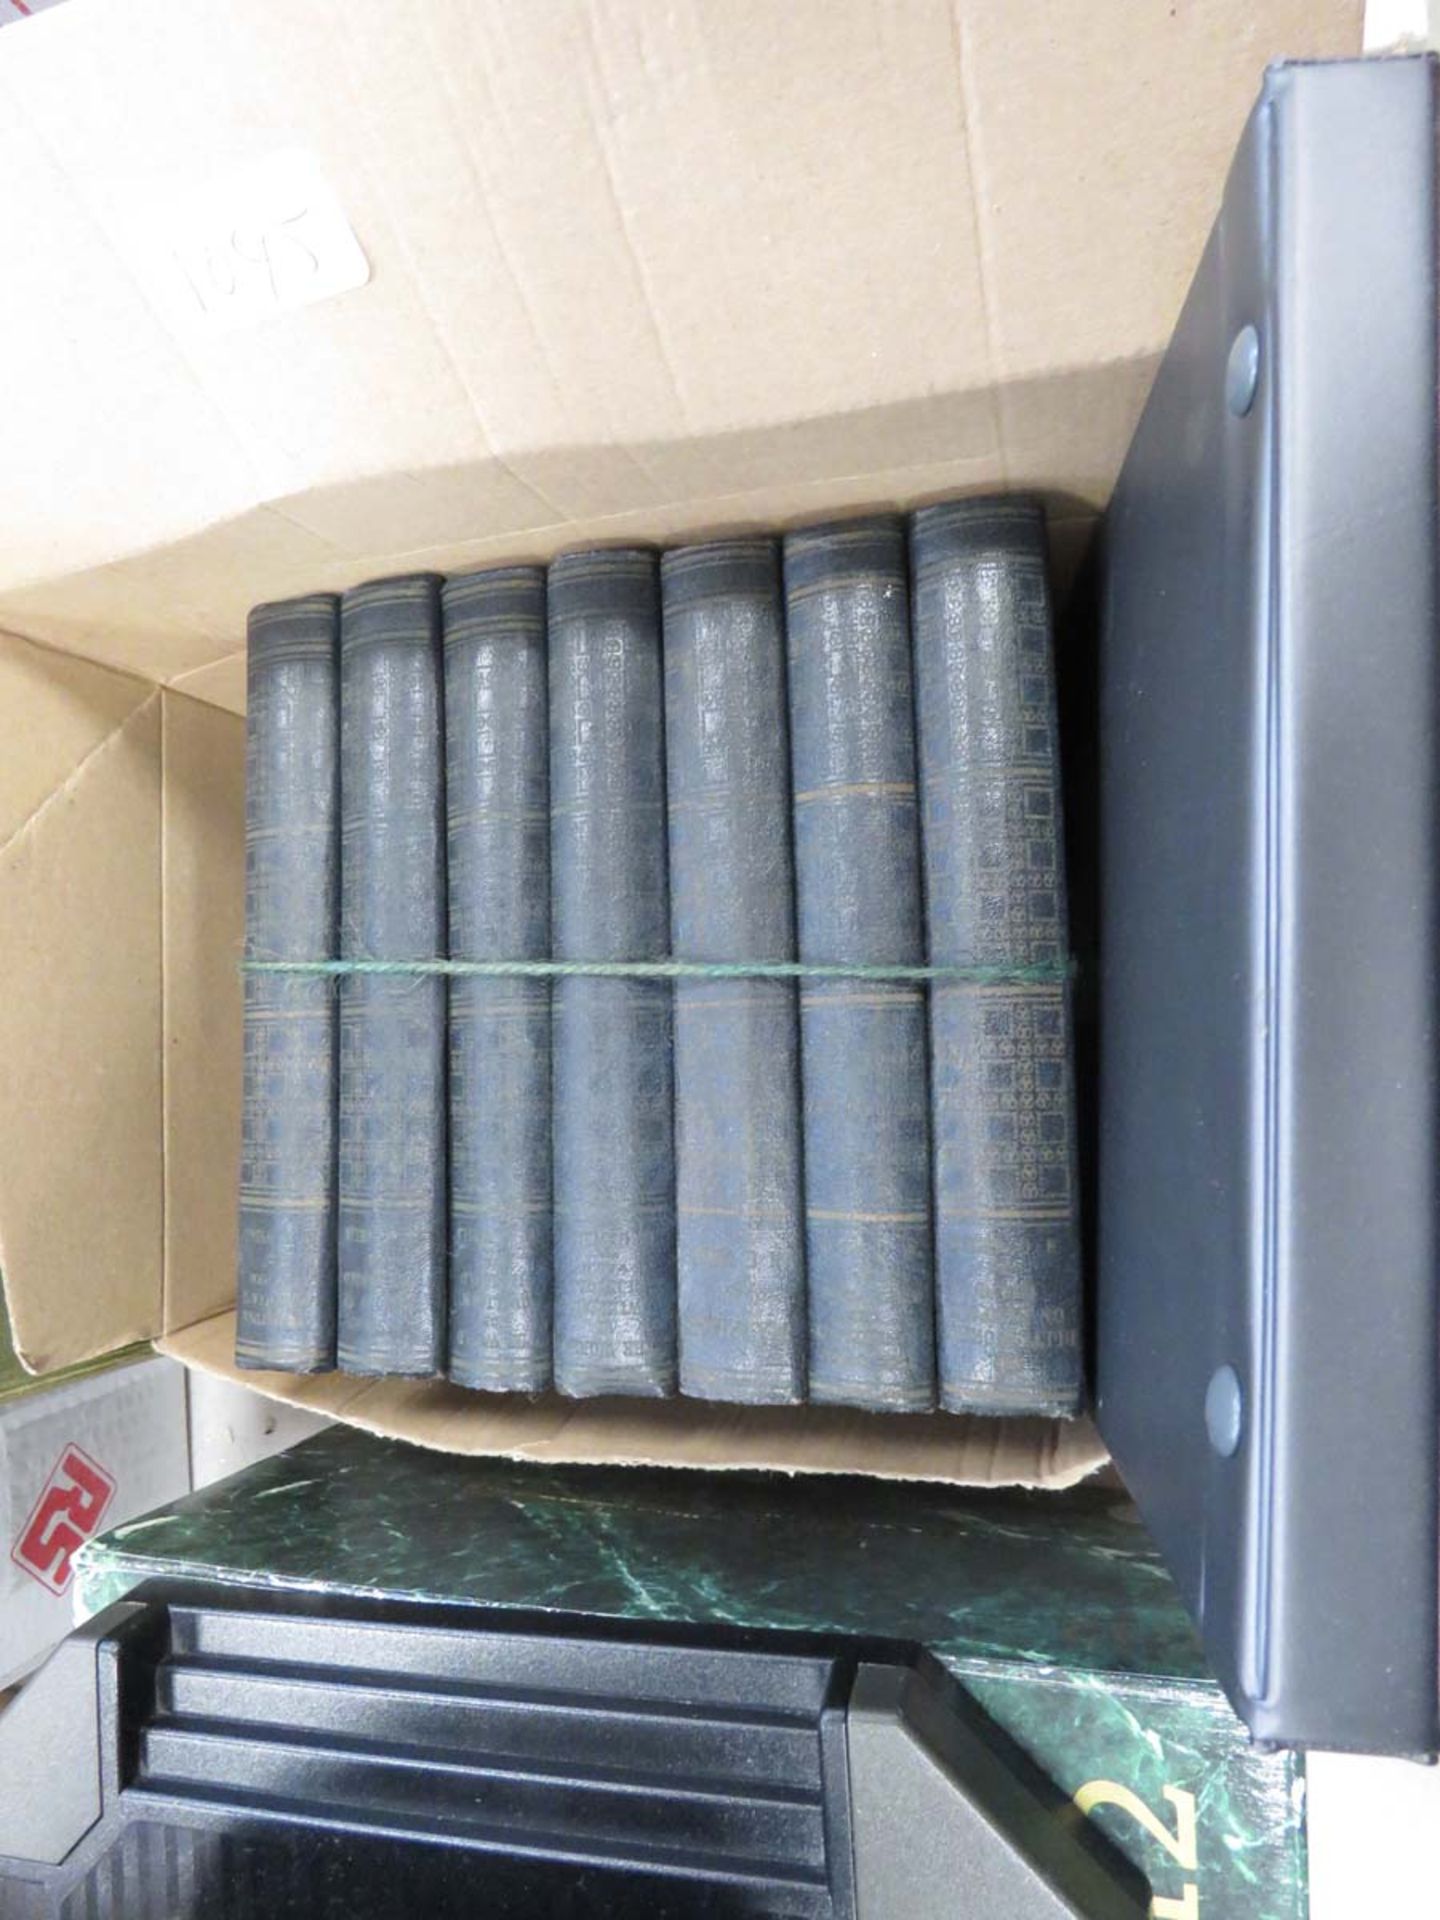 7 volumes of H.G.Wells books plus a set of 7'' vinyl linguaphone records